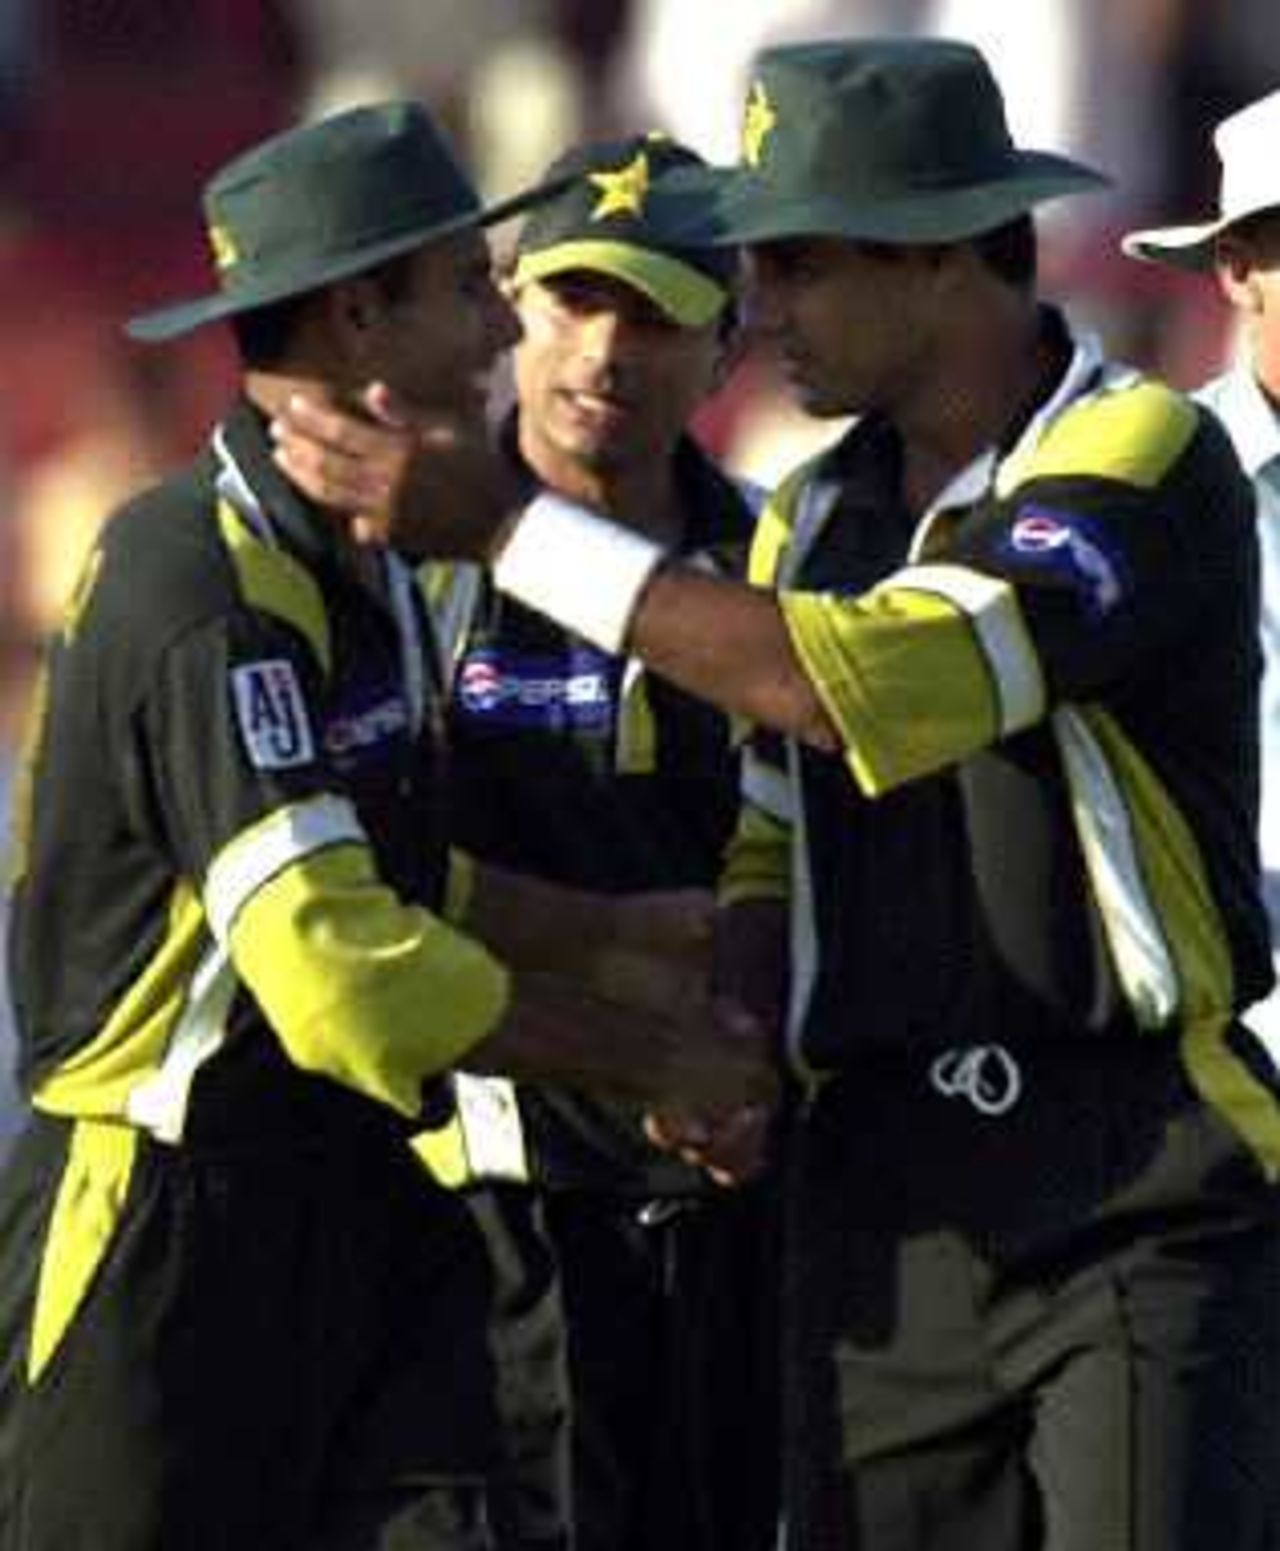 Waqar Younis congratulates Abdur Razzaq and Saqlain Mushtaq who played vital roles in New Zealand's early dismissal, ODI5 at Sharjah, New Zealand v Pakistan, 15 April 2001